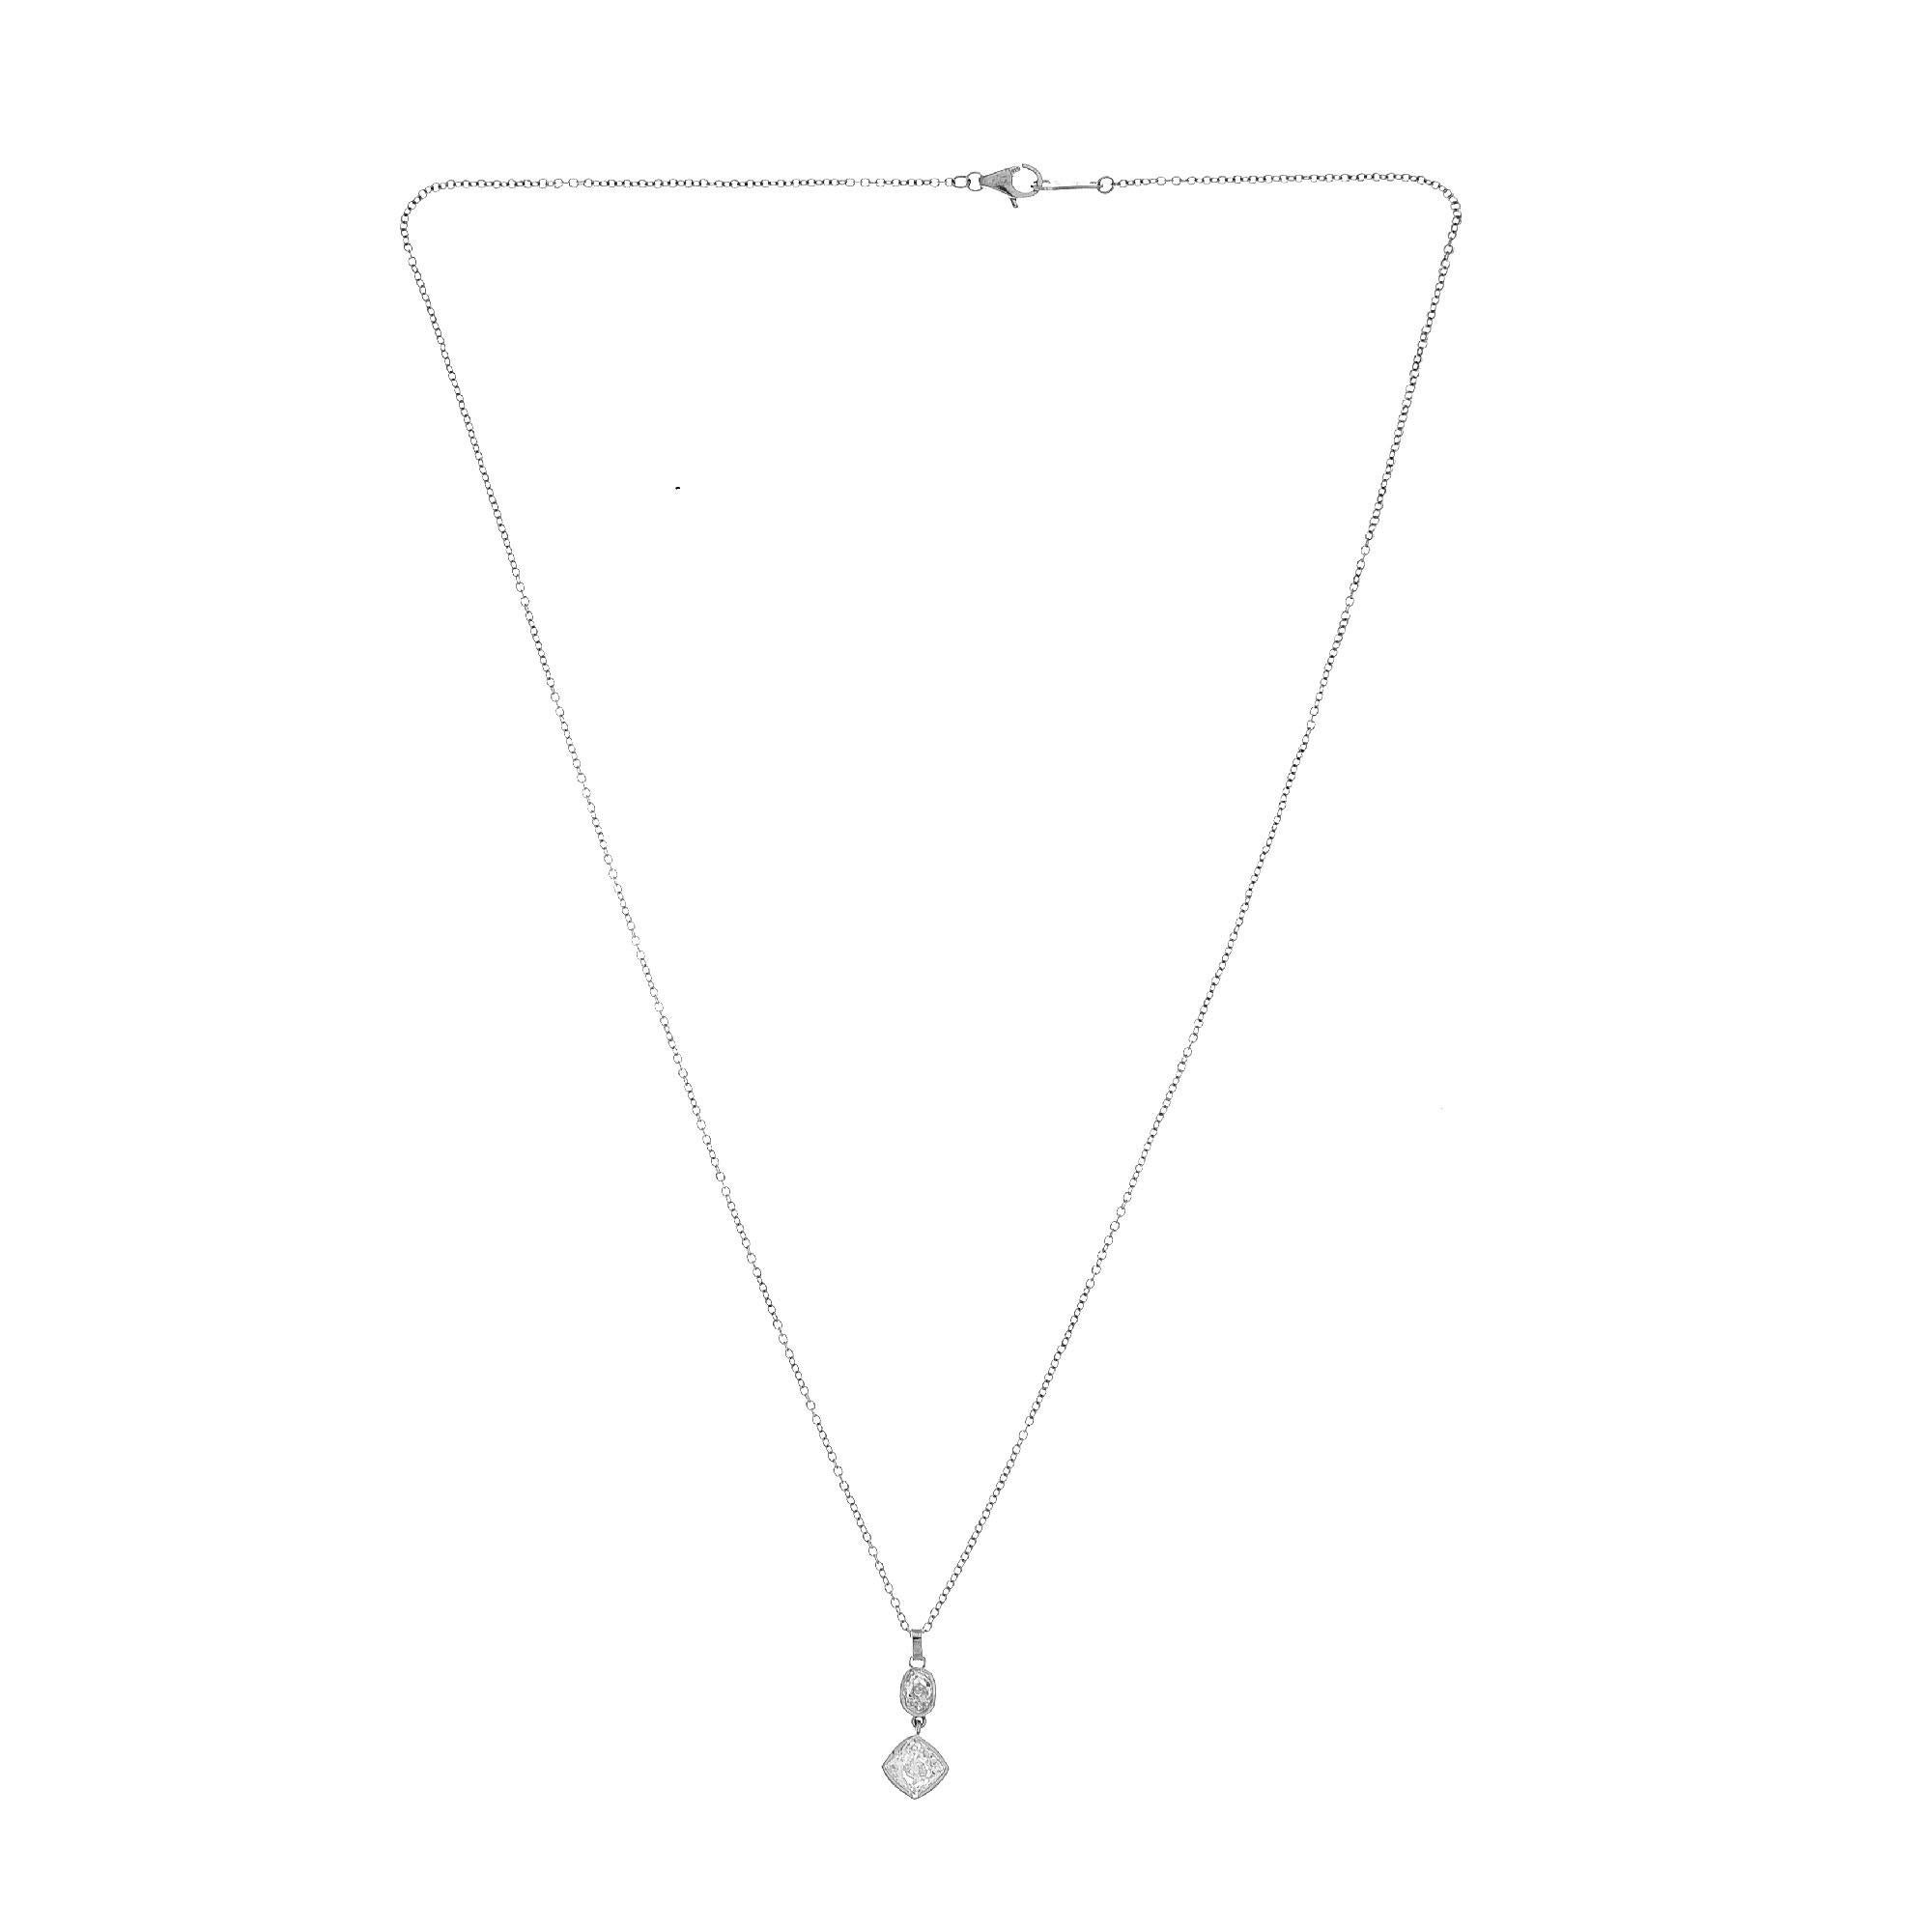 Peter Suchy GIA Certified 1.11 Carat Diamond Platinum Pendant Necklace For Sale 2